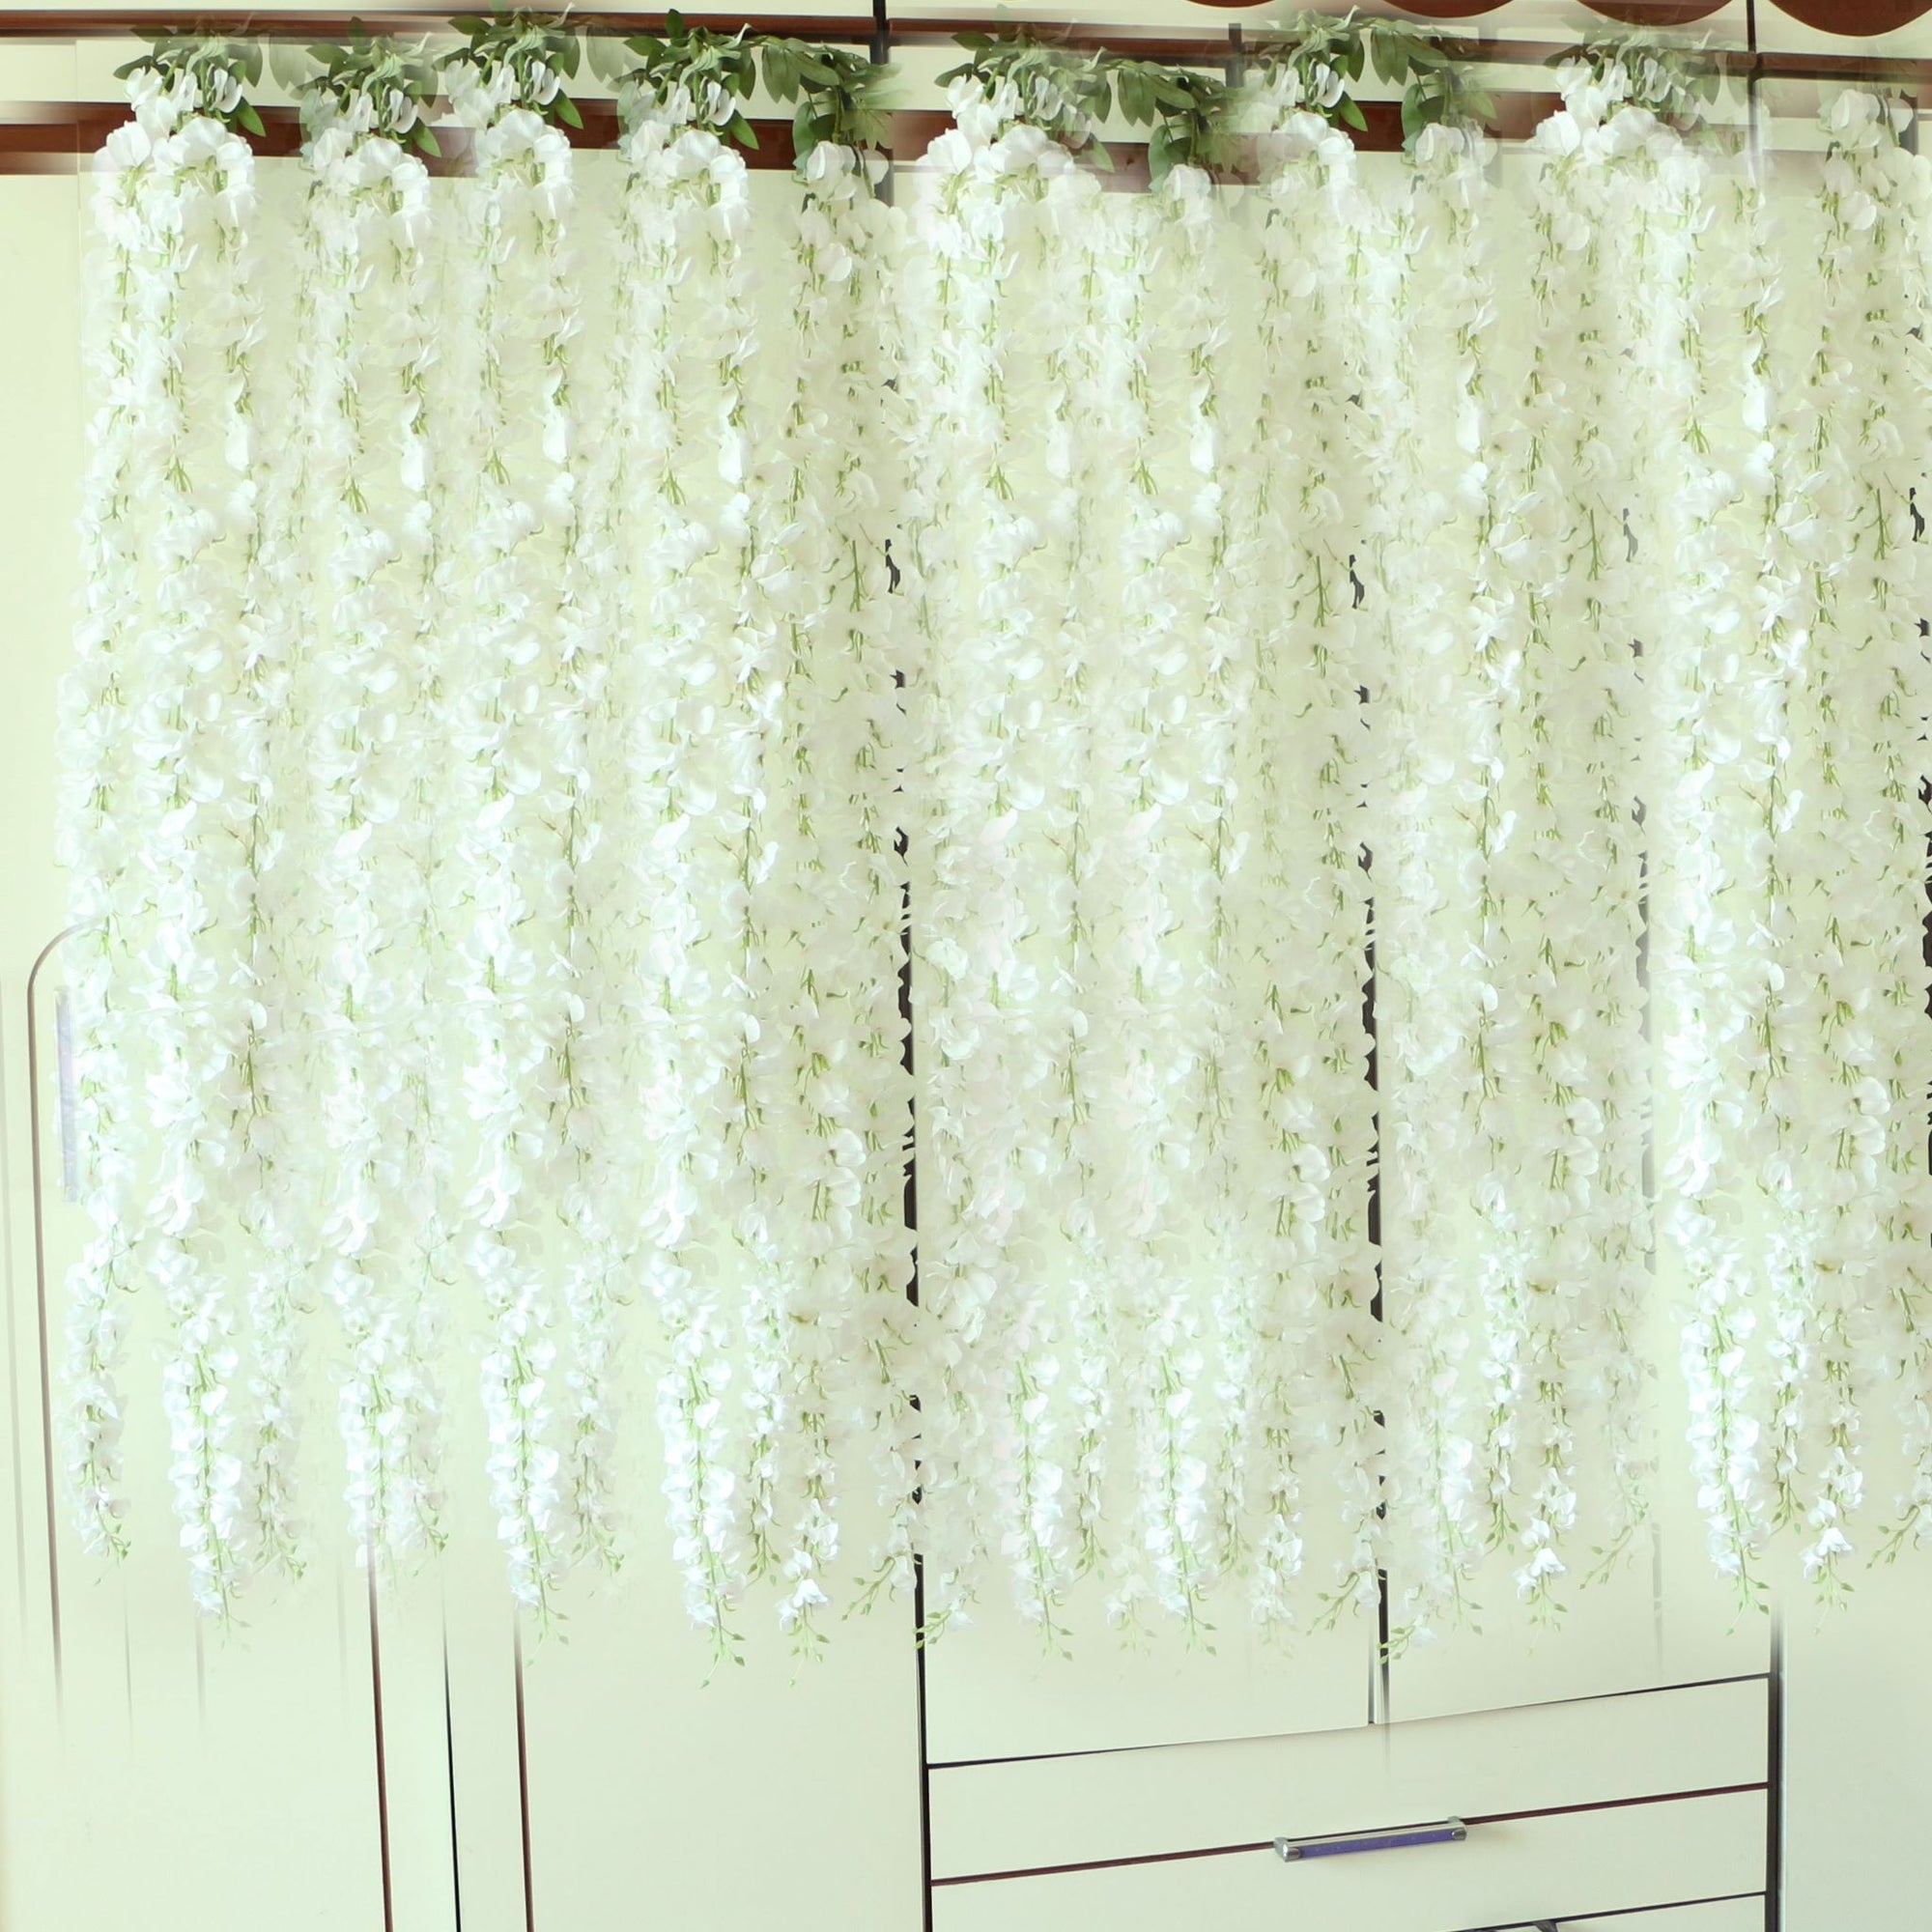 White Wisteria Vines Artificial Hanging Flower Garland